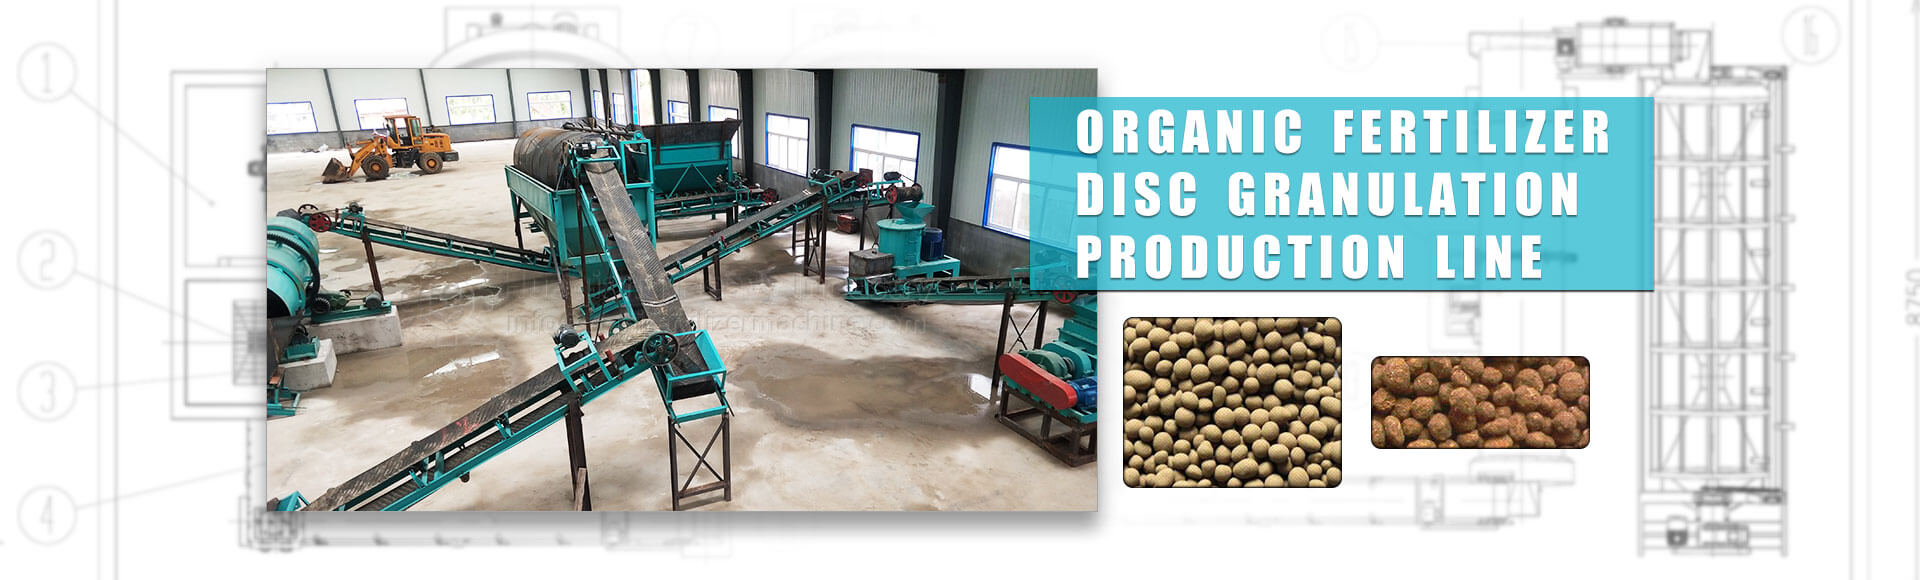 Organic Fertilizer Disc Granulation Production Line